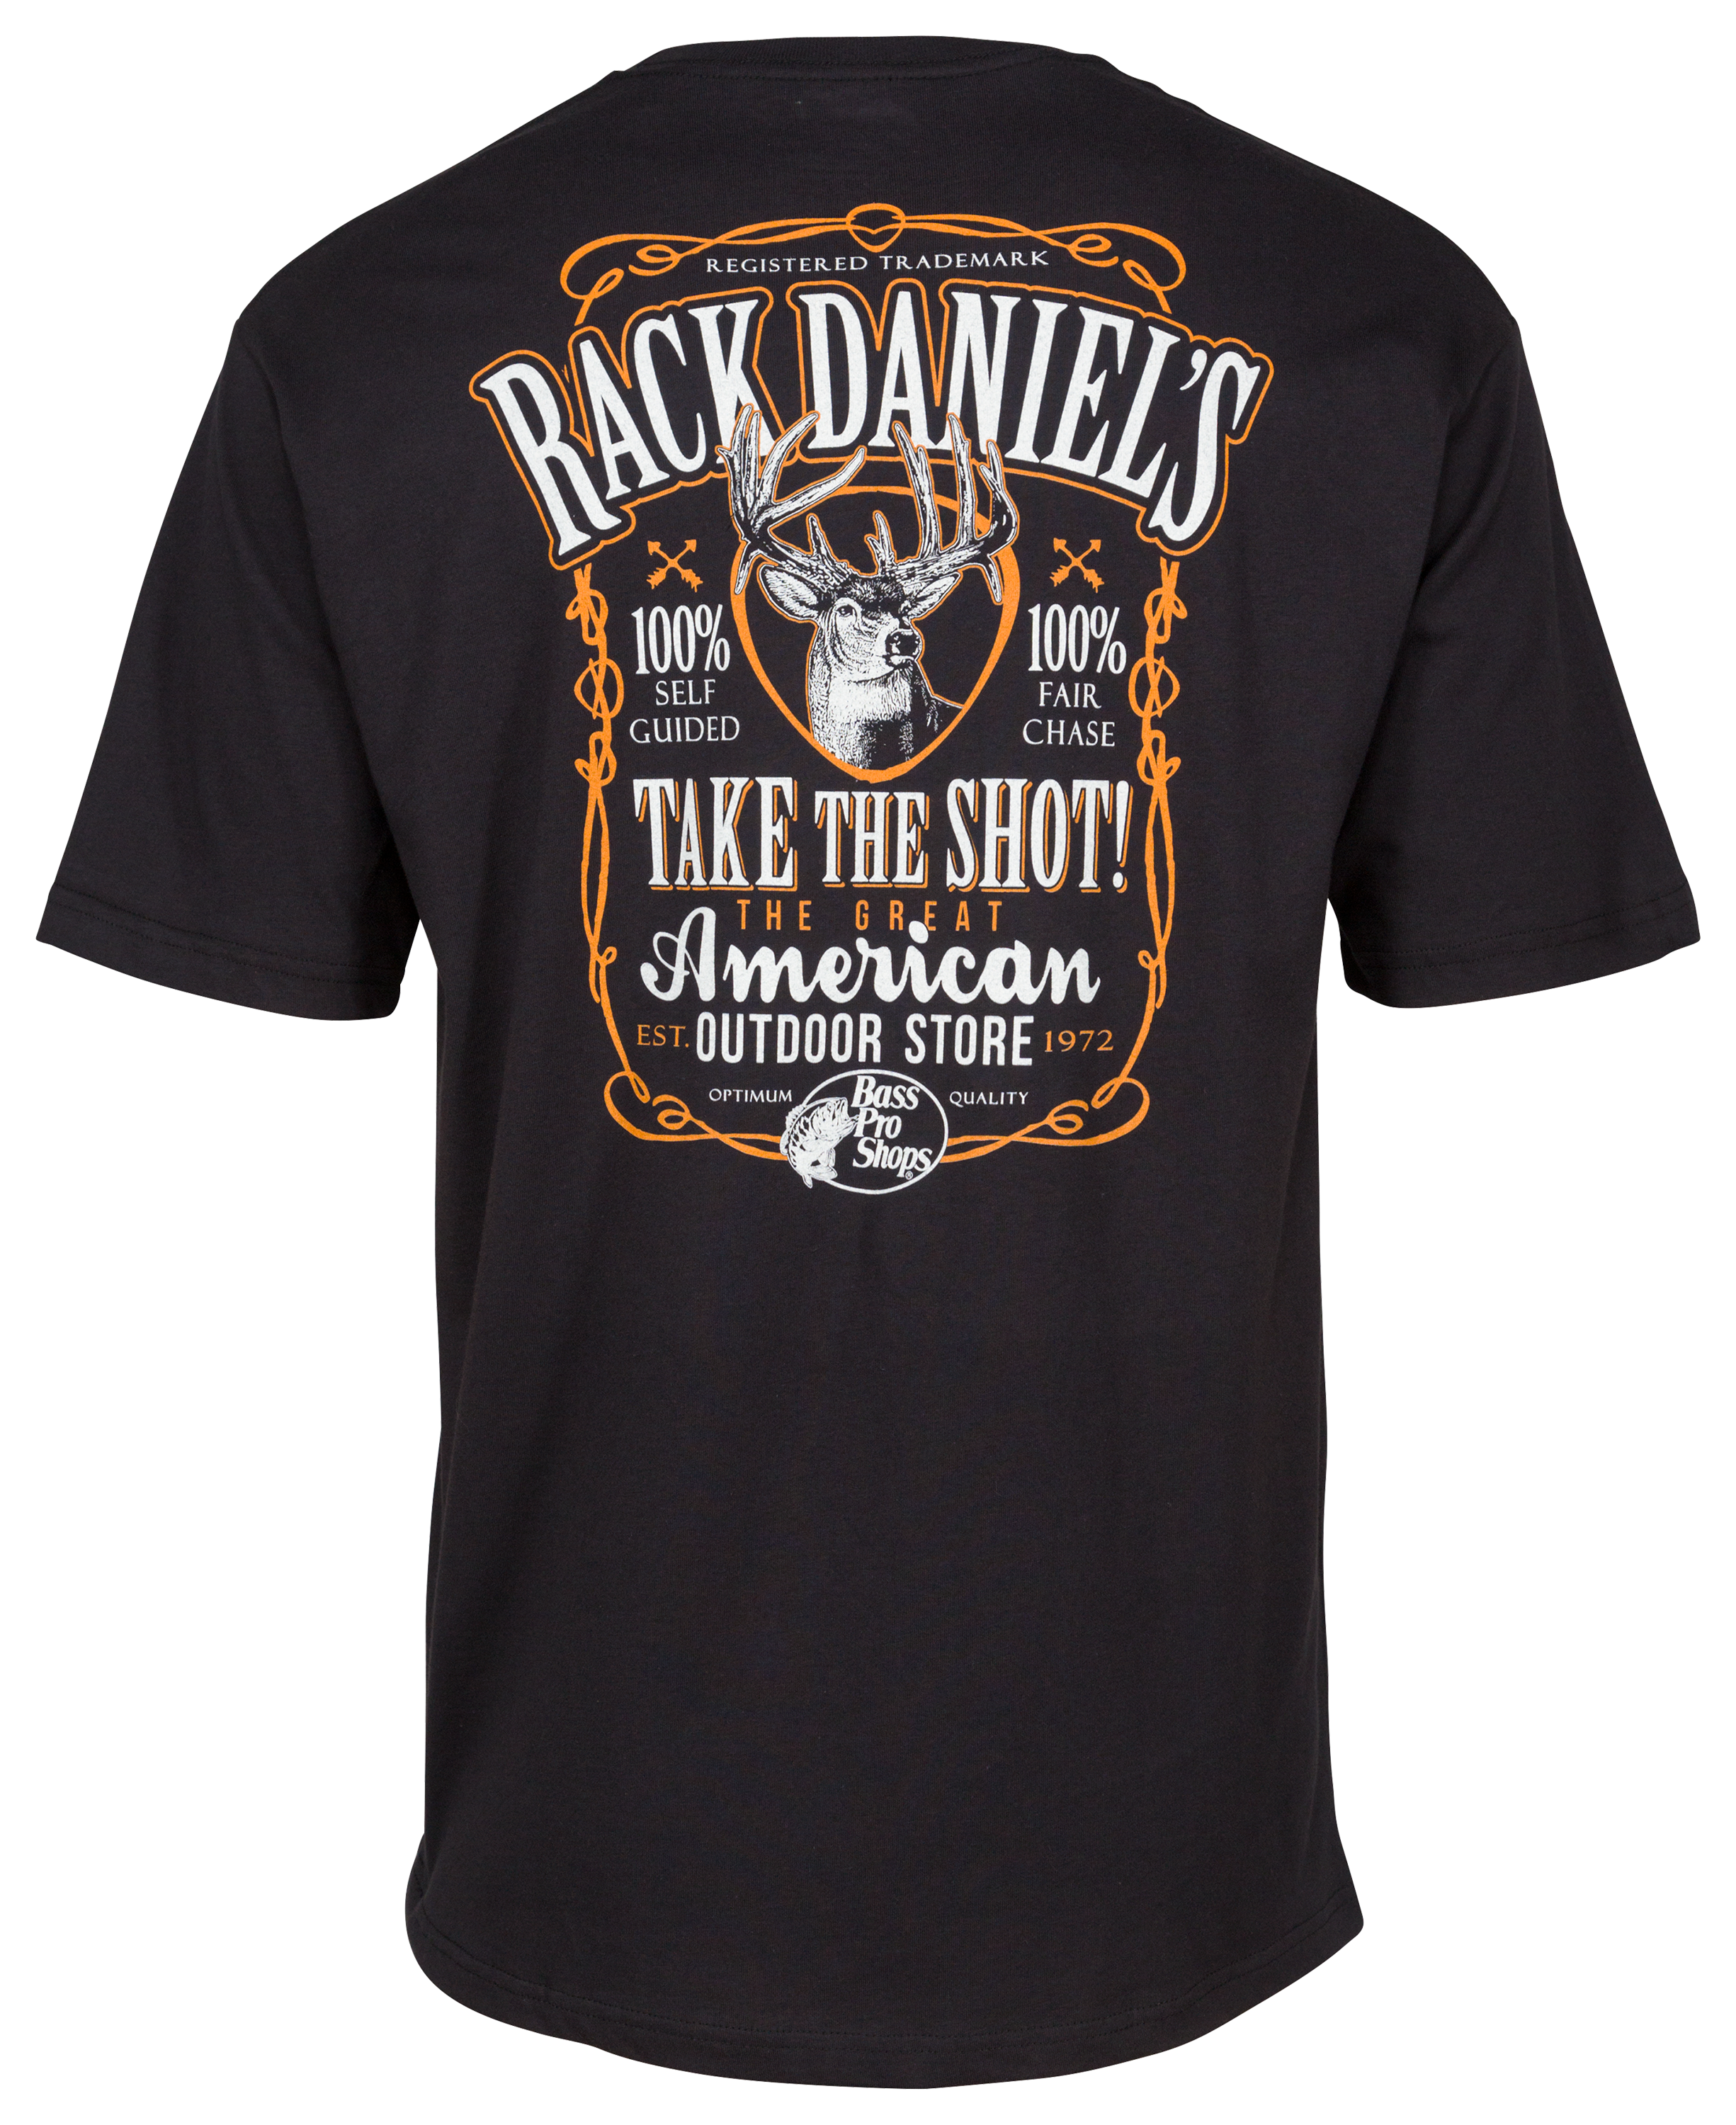 Bass Pro Shops Rack Daniel's II Short-Sleeve T-Shirt for Men - Black - M